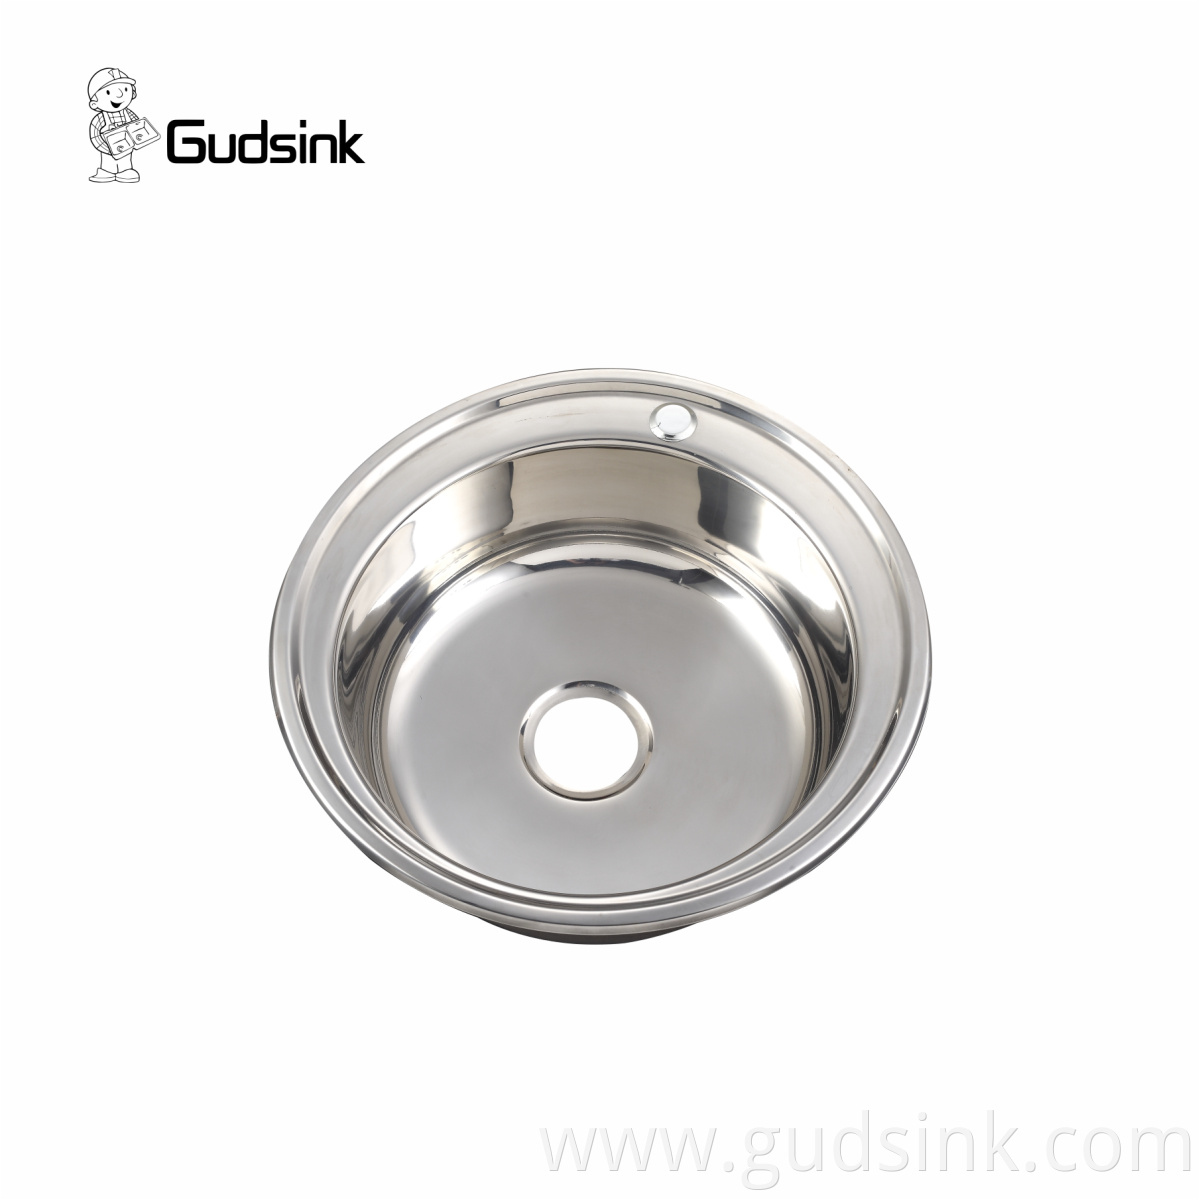 single bowl undermount stainless steel sink